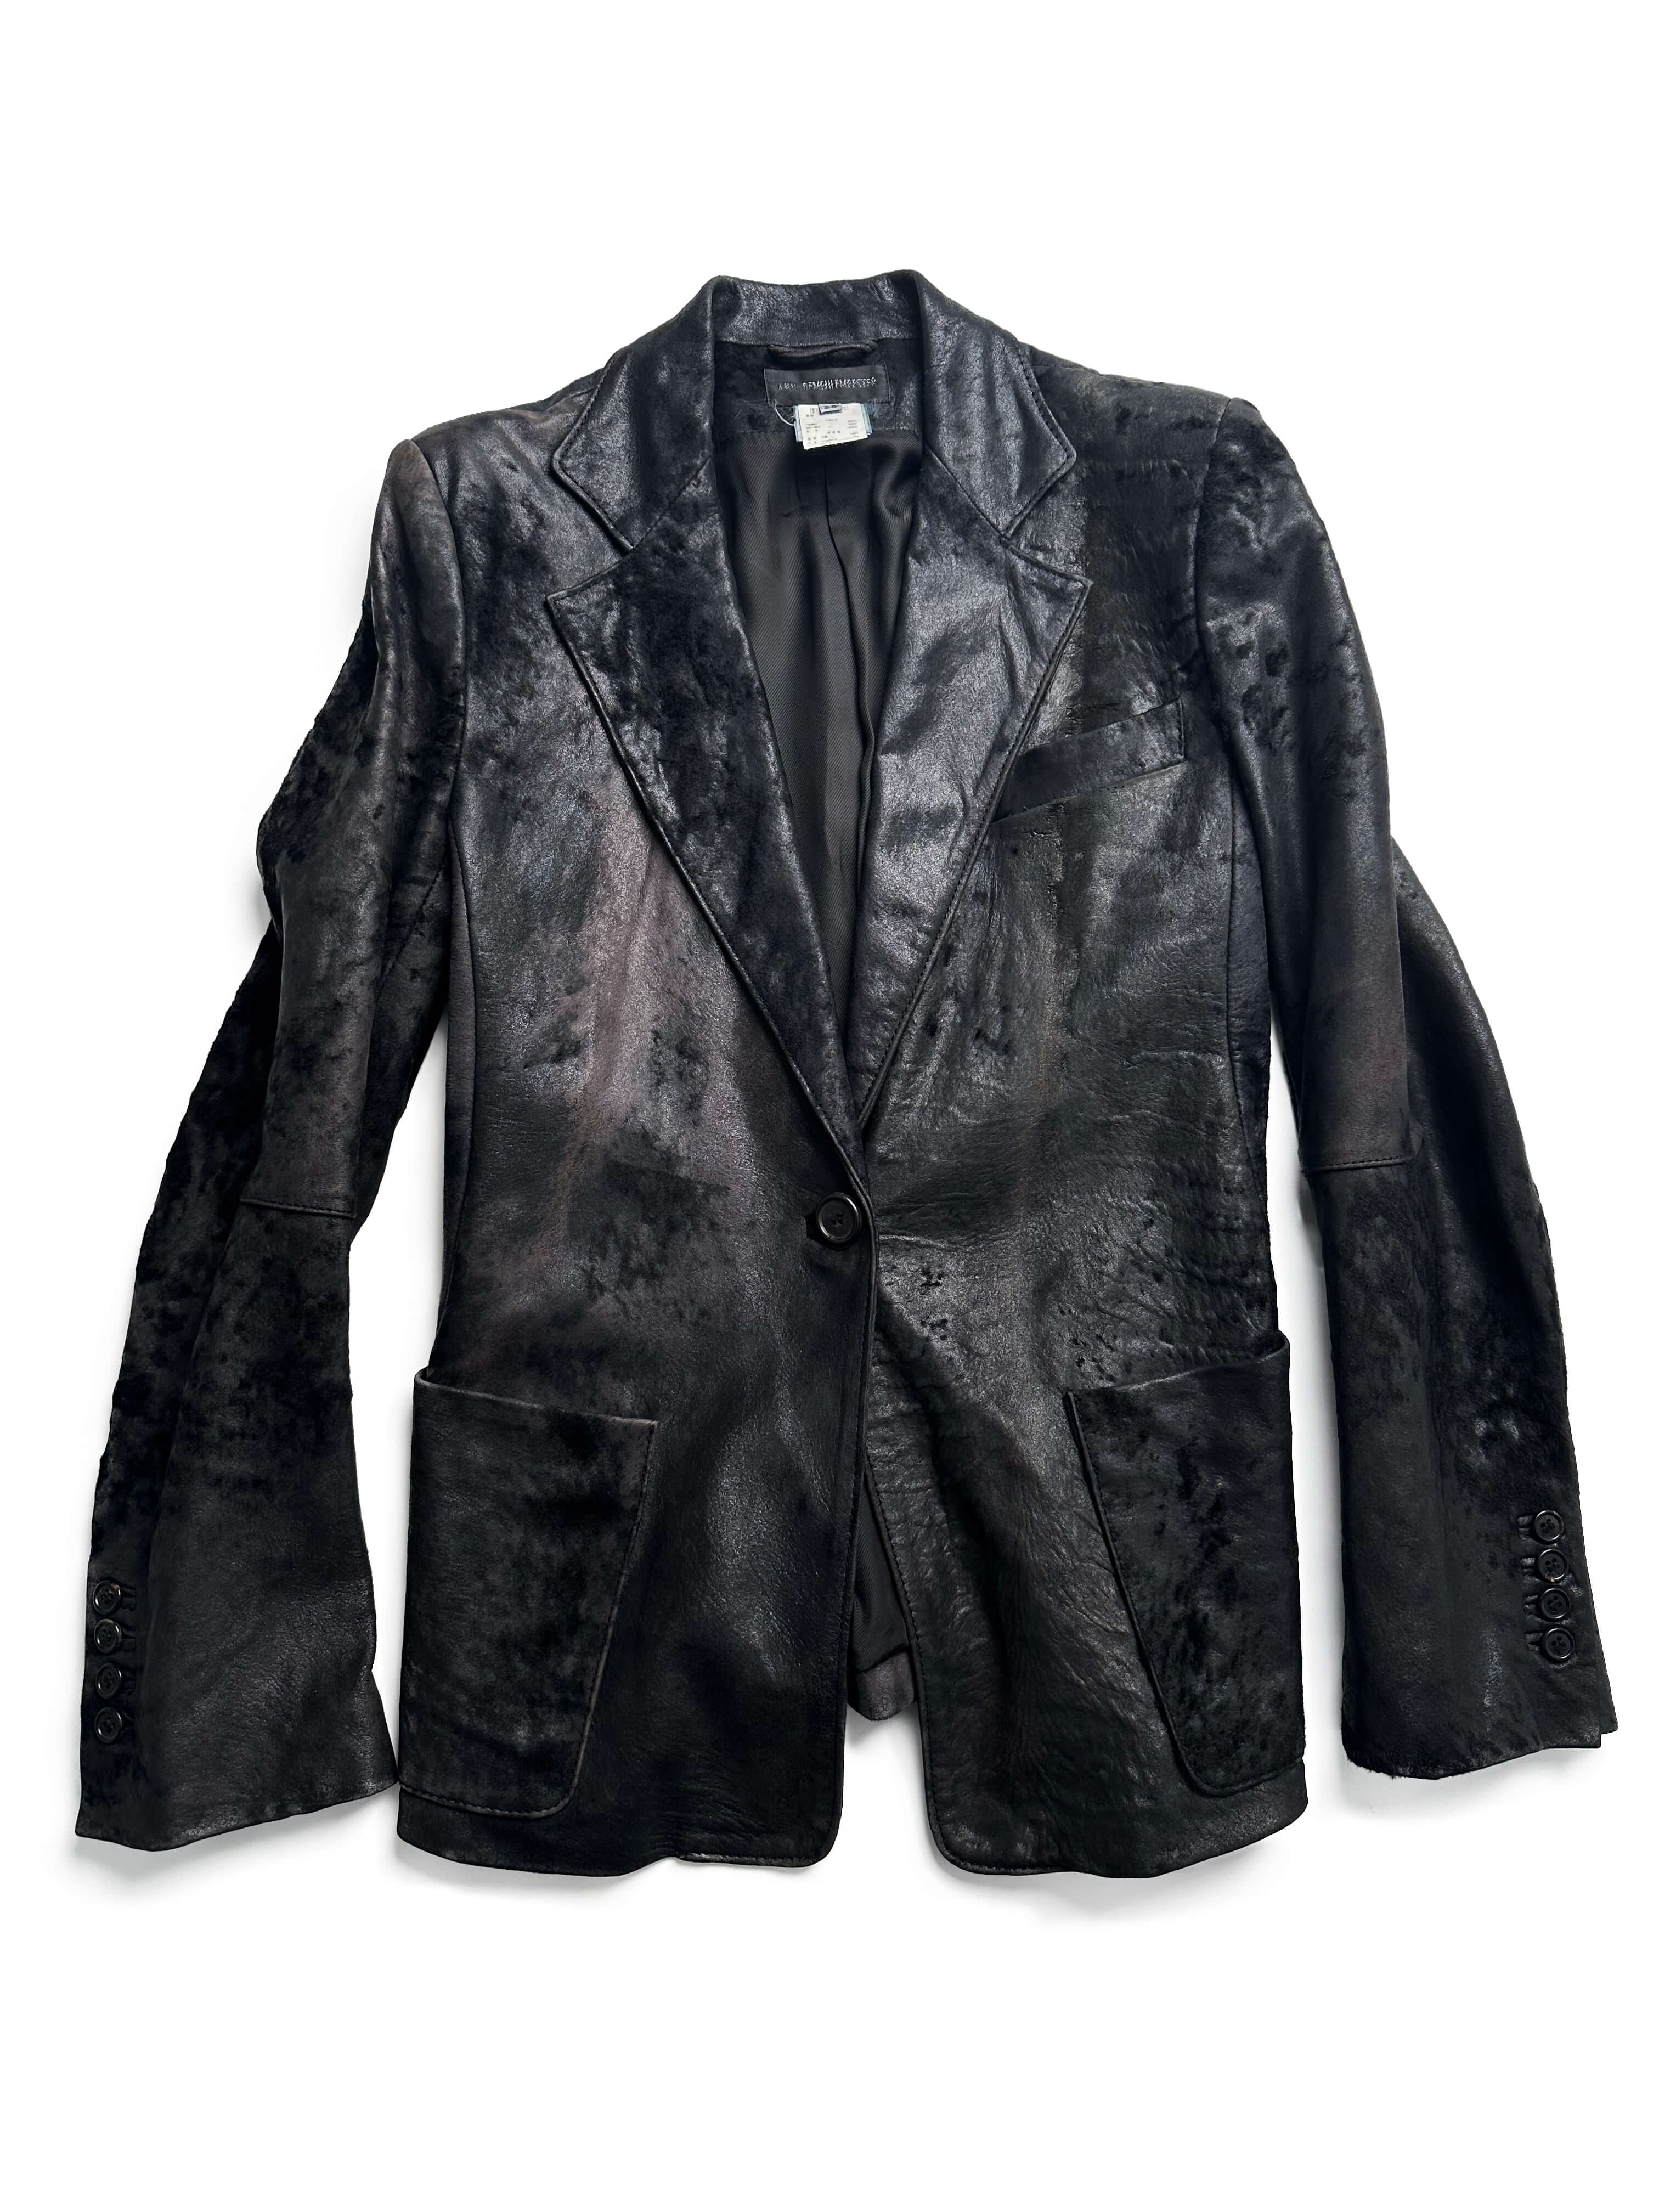 ANN DEMEULEMEESTER 00s scratch leather jacket